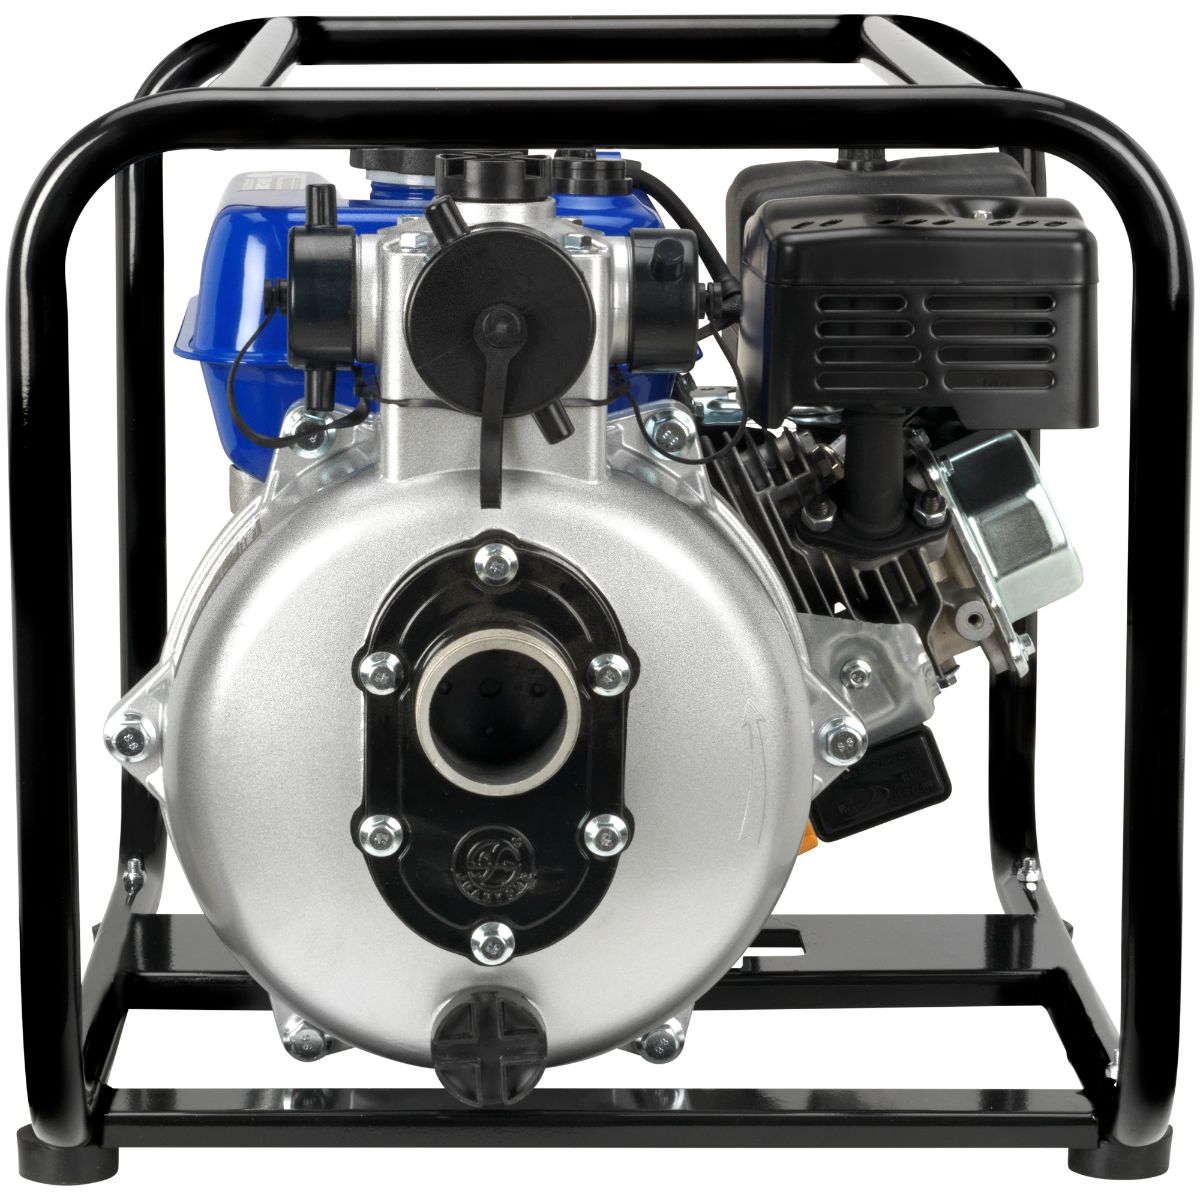 DuroMax  208cc 70-GPM 2-Inch Gasoline High Pressure Water Pump